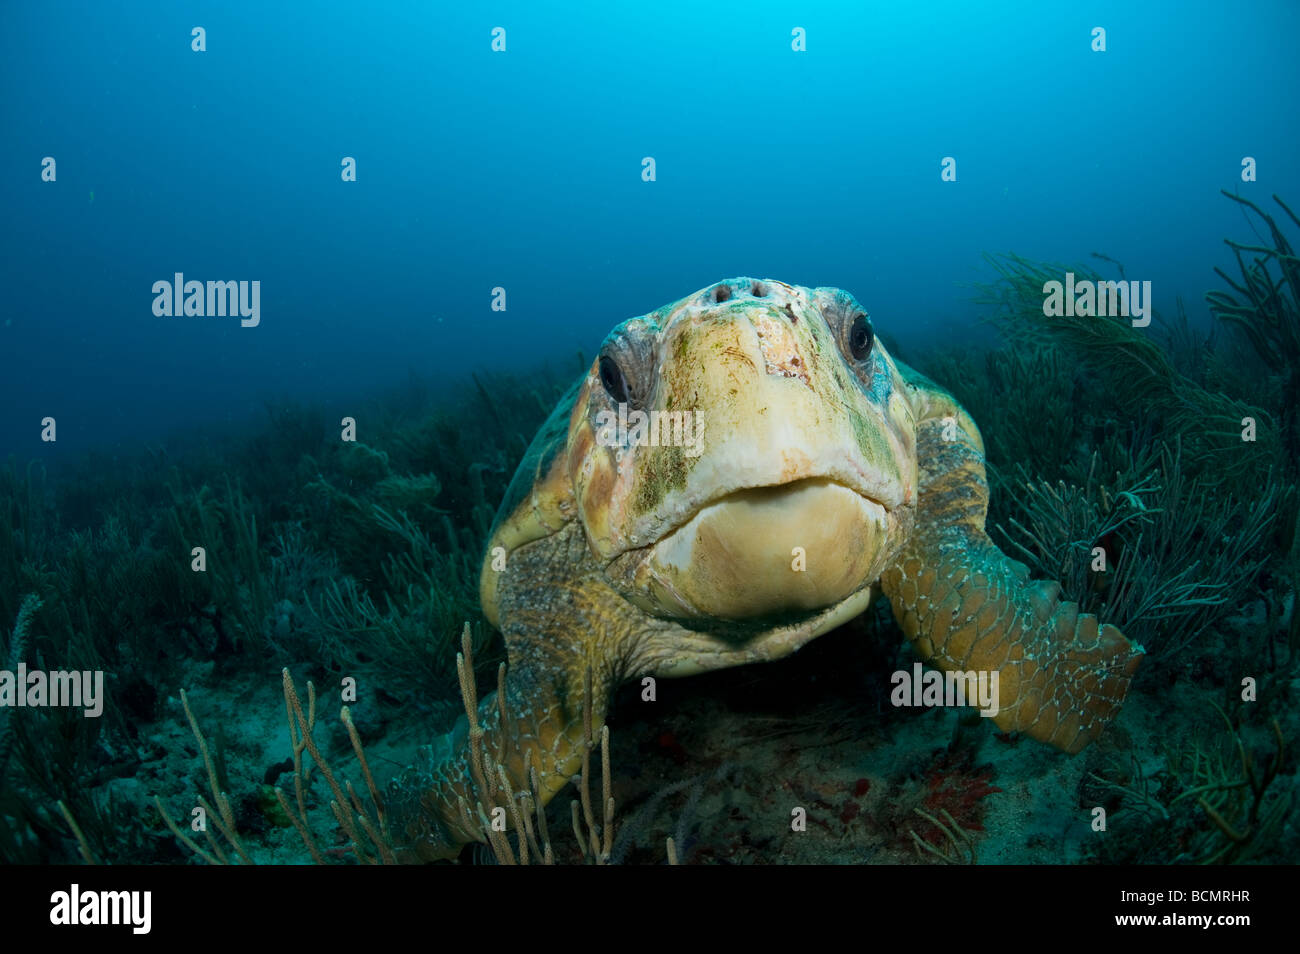 Hembra tortuga boba (Caretta caretta) fotografiado en submarino Paul's Reef en Palm Beach, Florida. Foto de stock